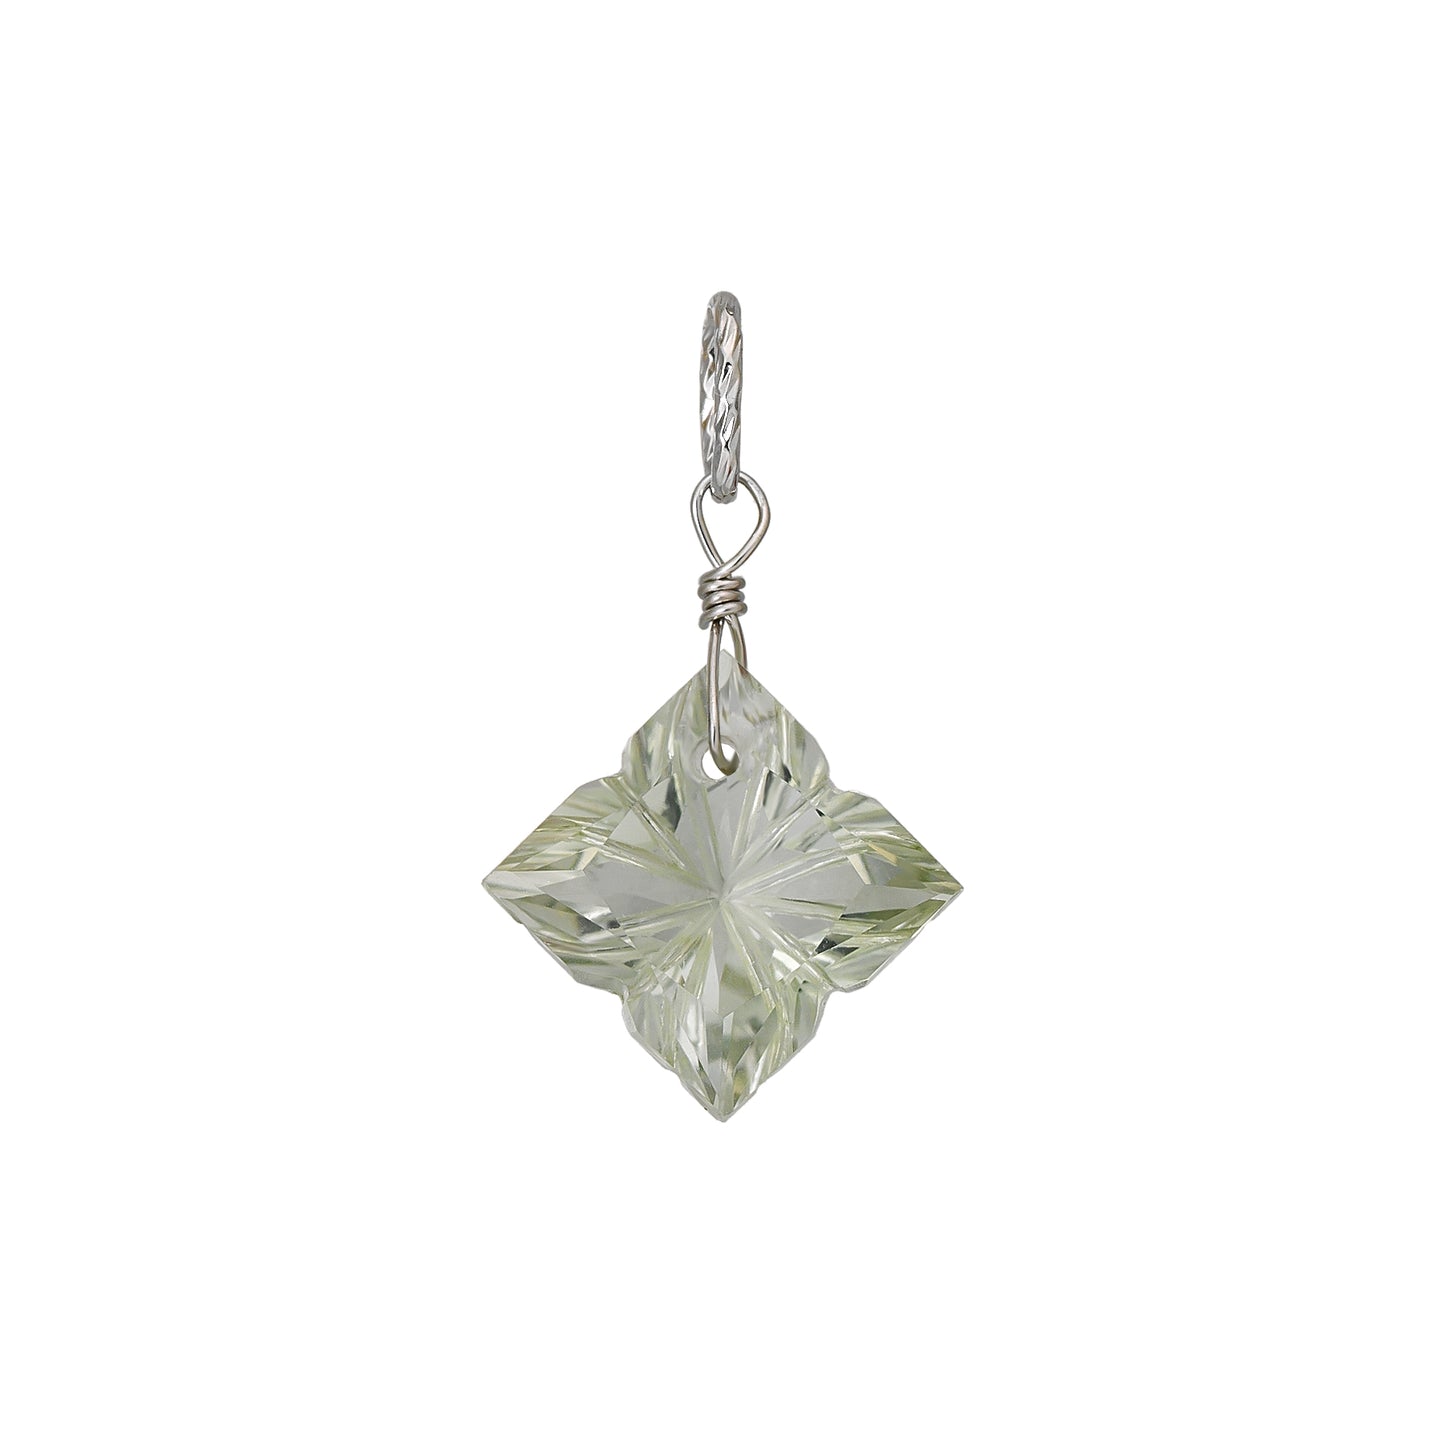 10K Green Quartz Necklace Charm (White Gold) - Product Image